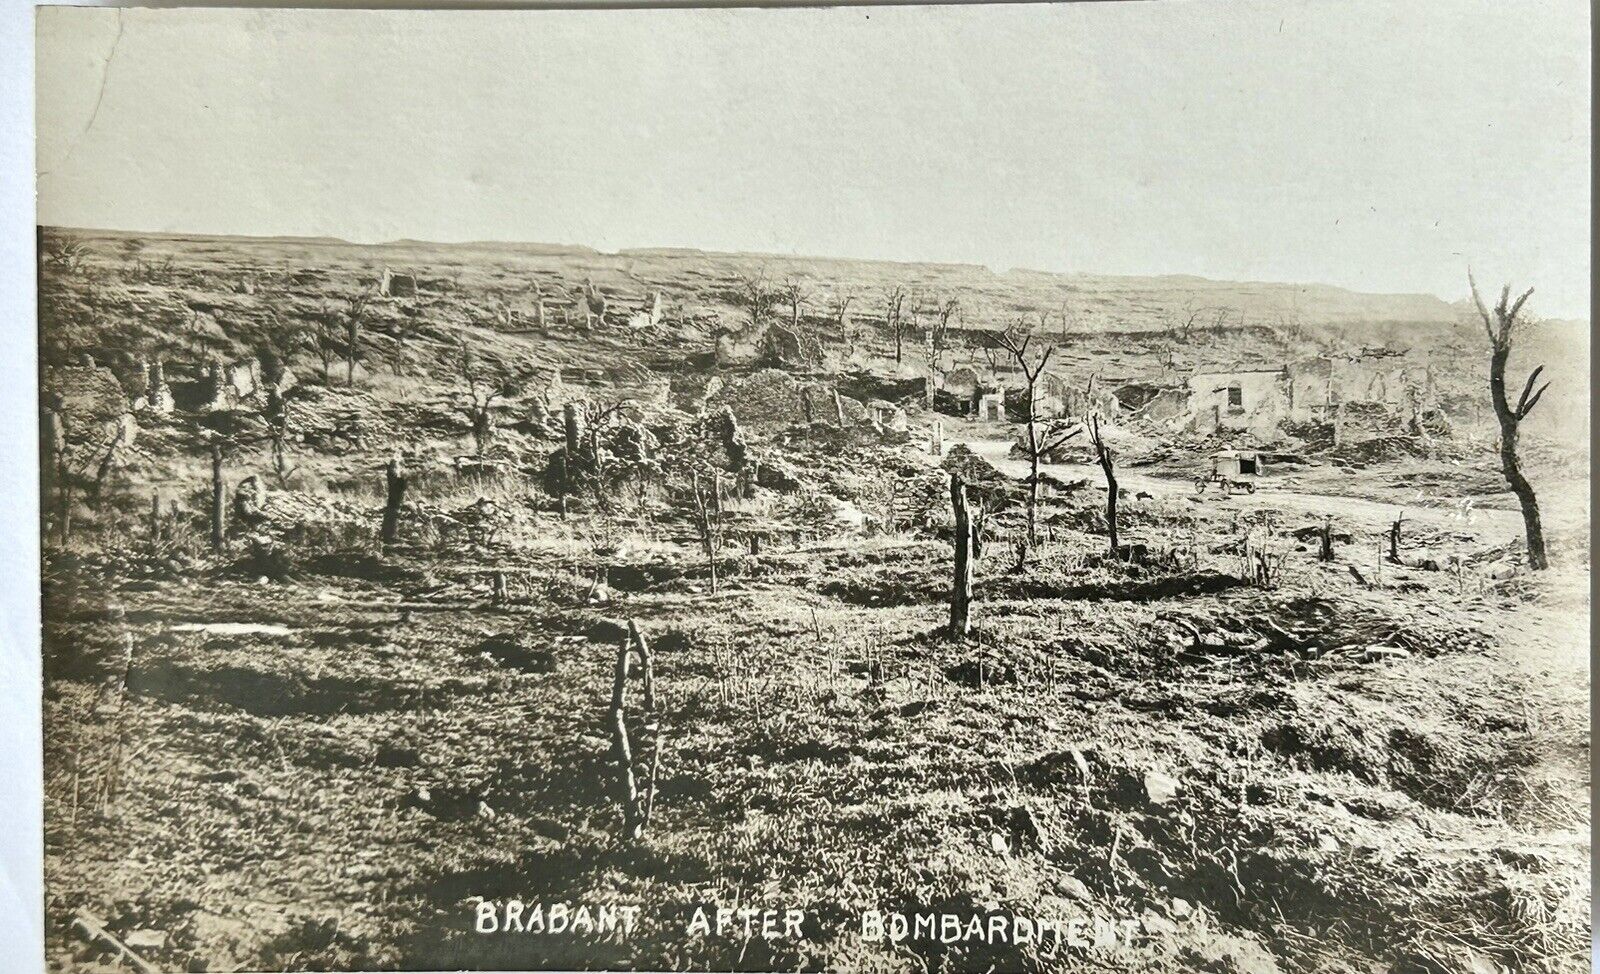 Brabant Belgium After German Bombardment. Real Photo Postcard. 1944. RPPC WWII